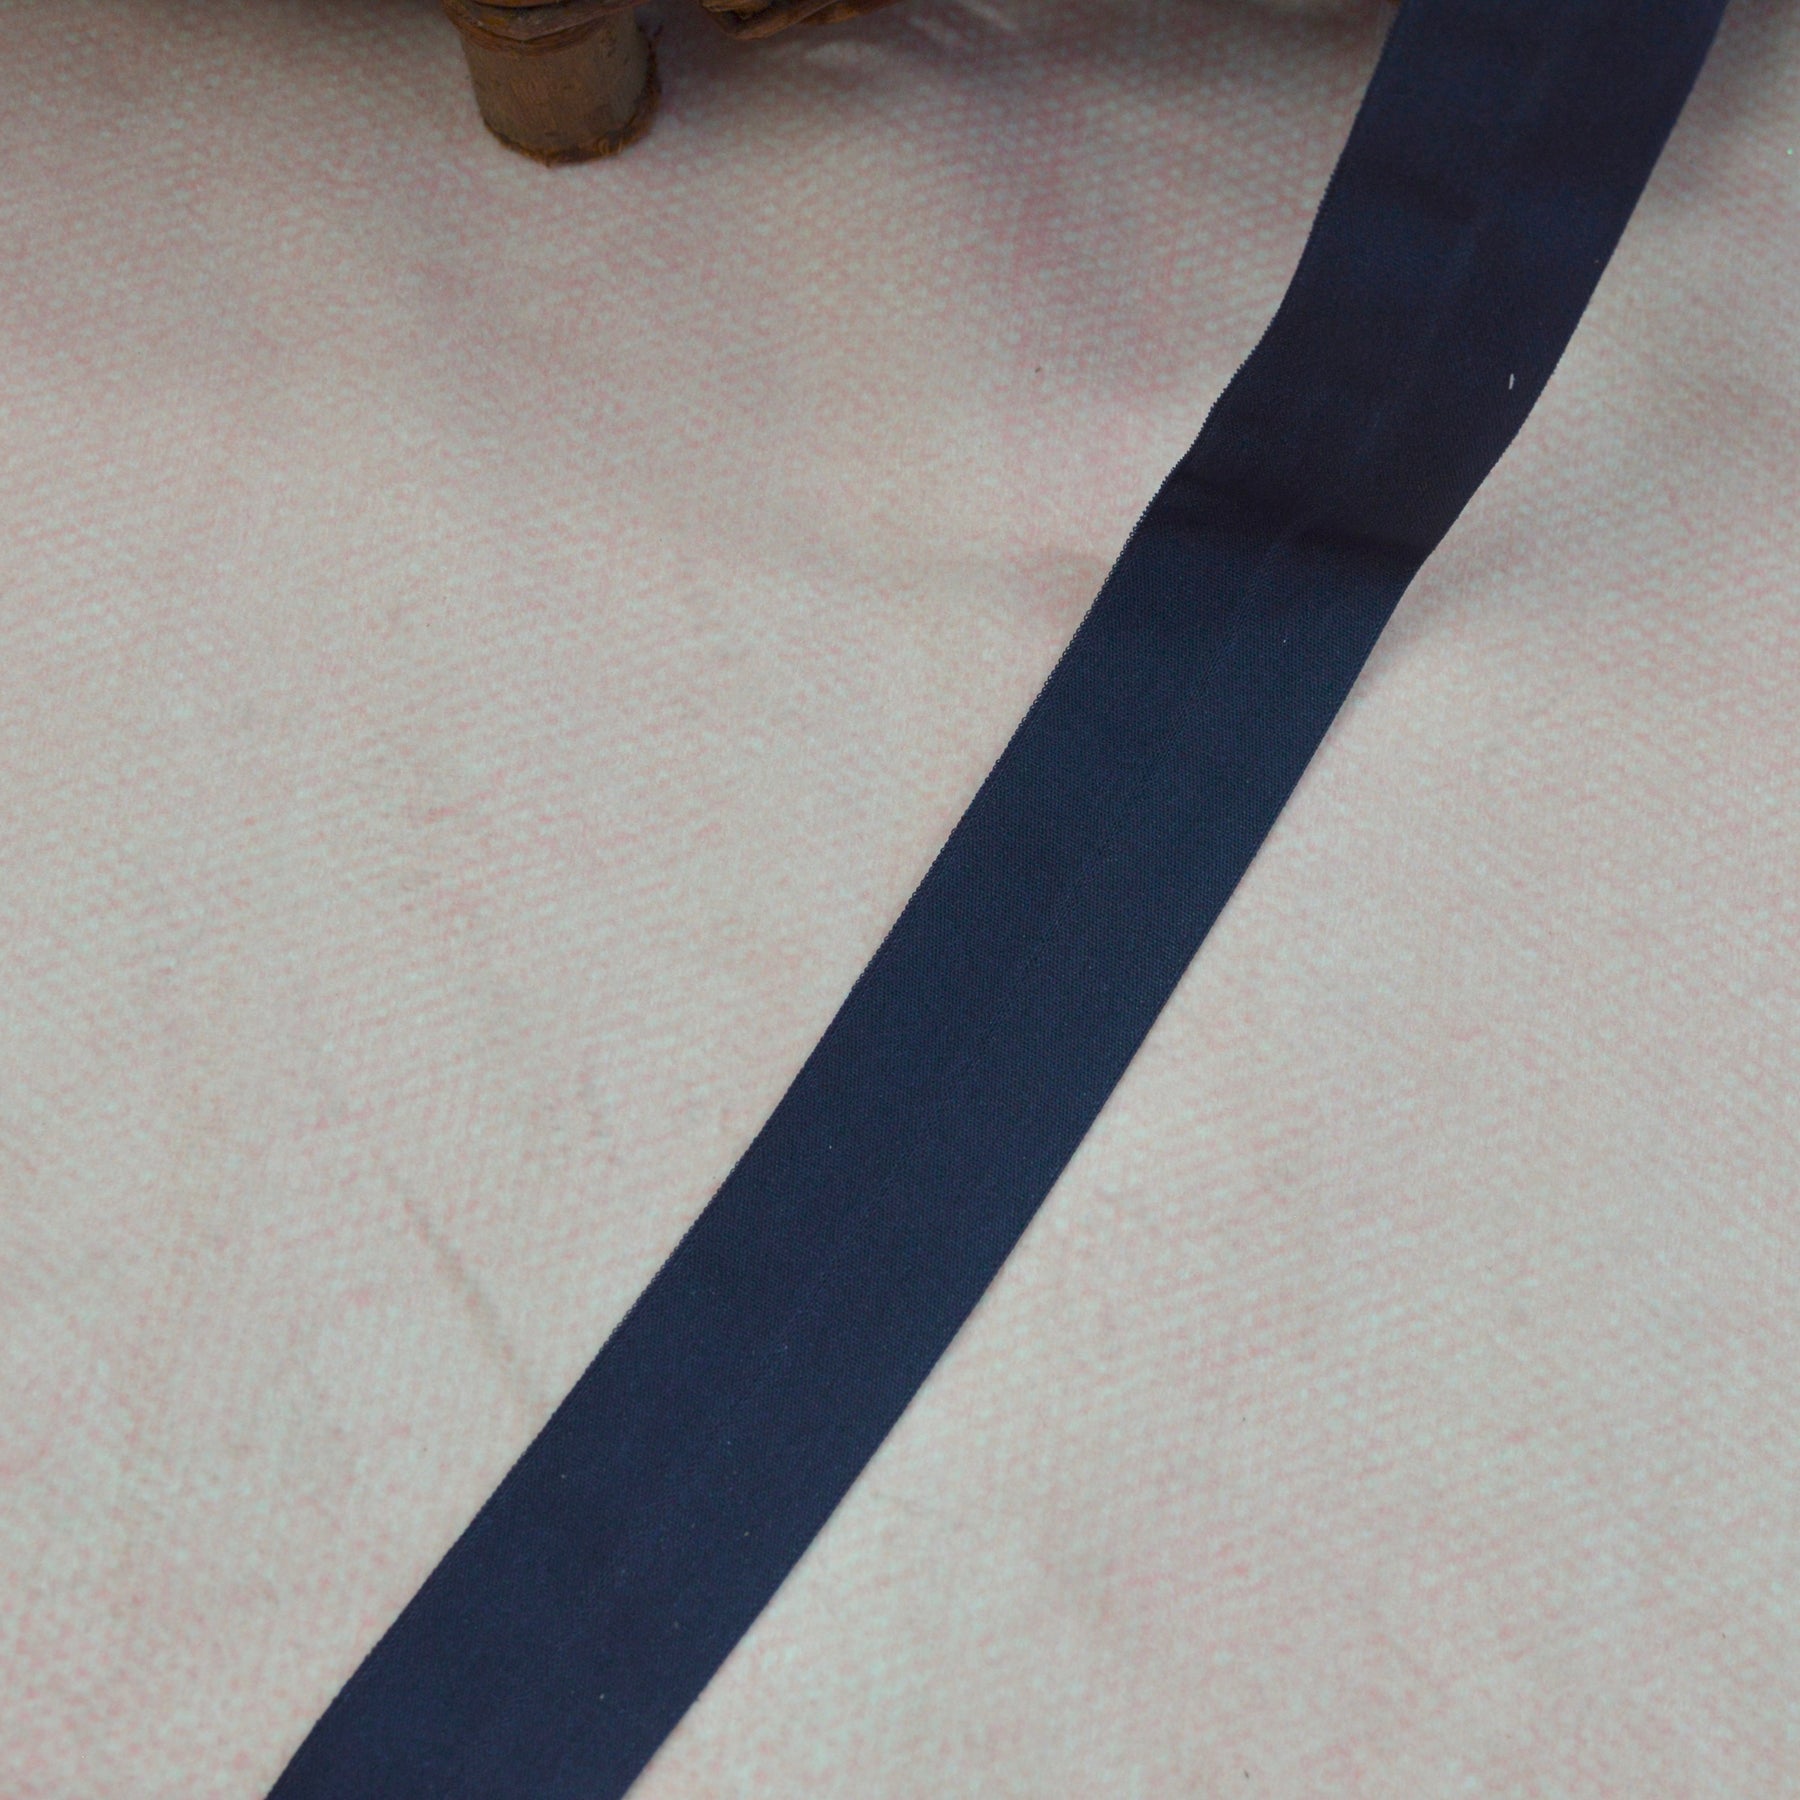 Faltgummi / Falzgummi / elastisches Einfassband 30m dunkelblau Fabric poshpinks